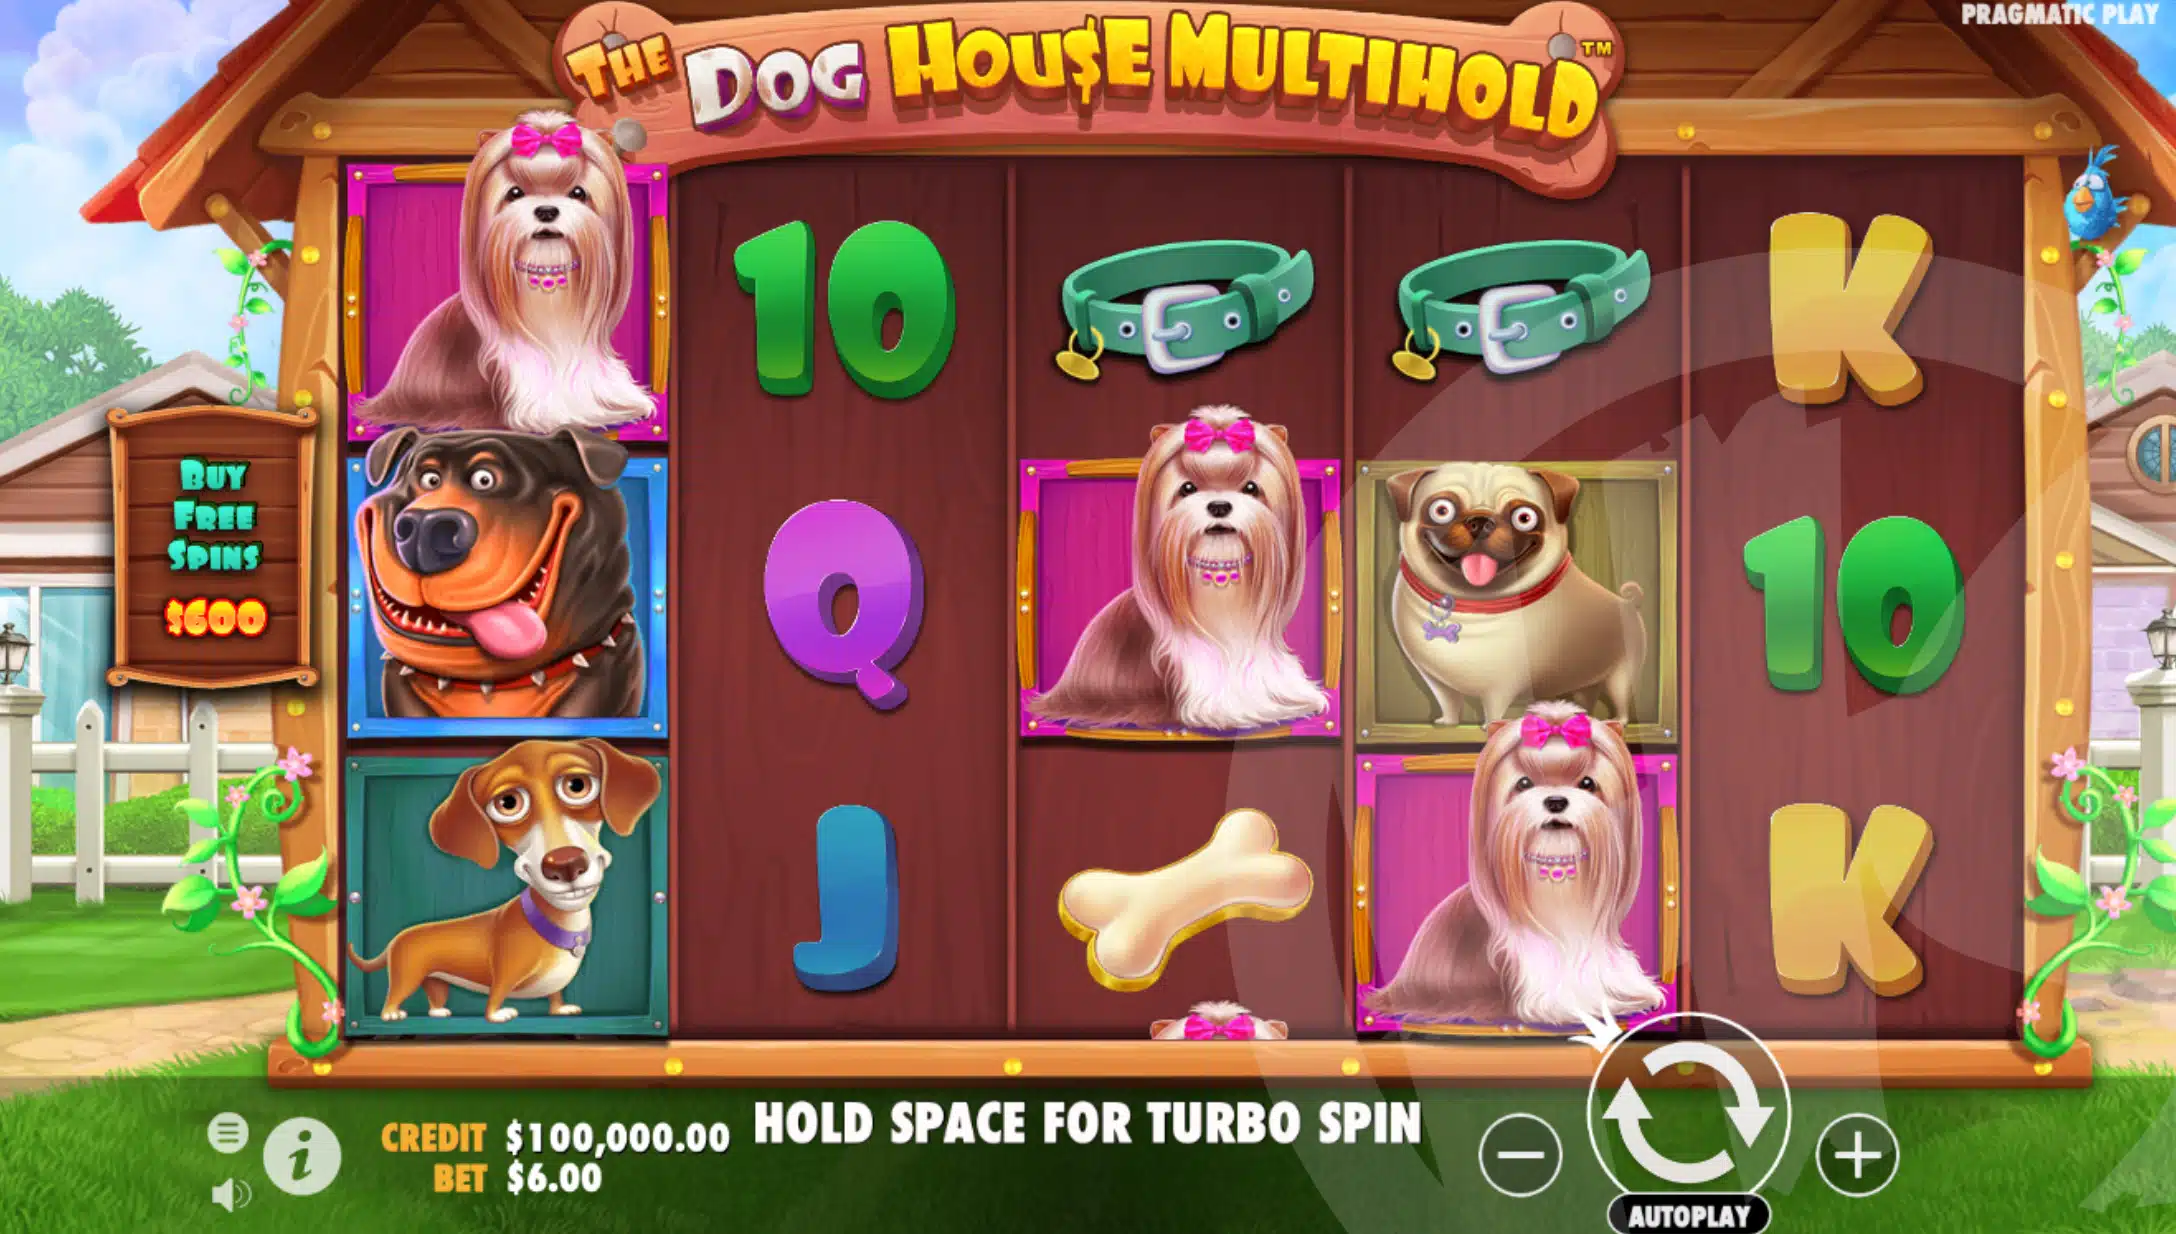 The Dog House Multihold Base Game